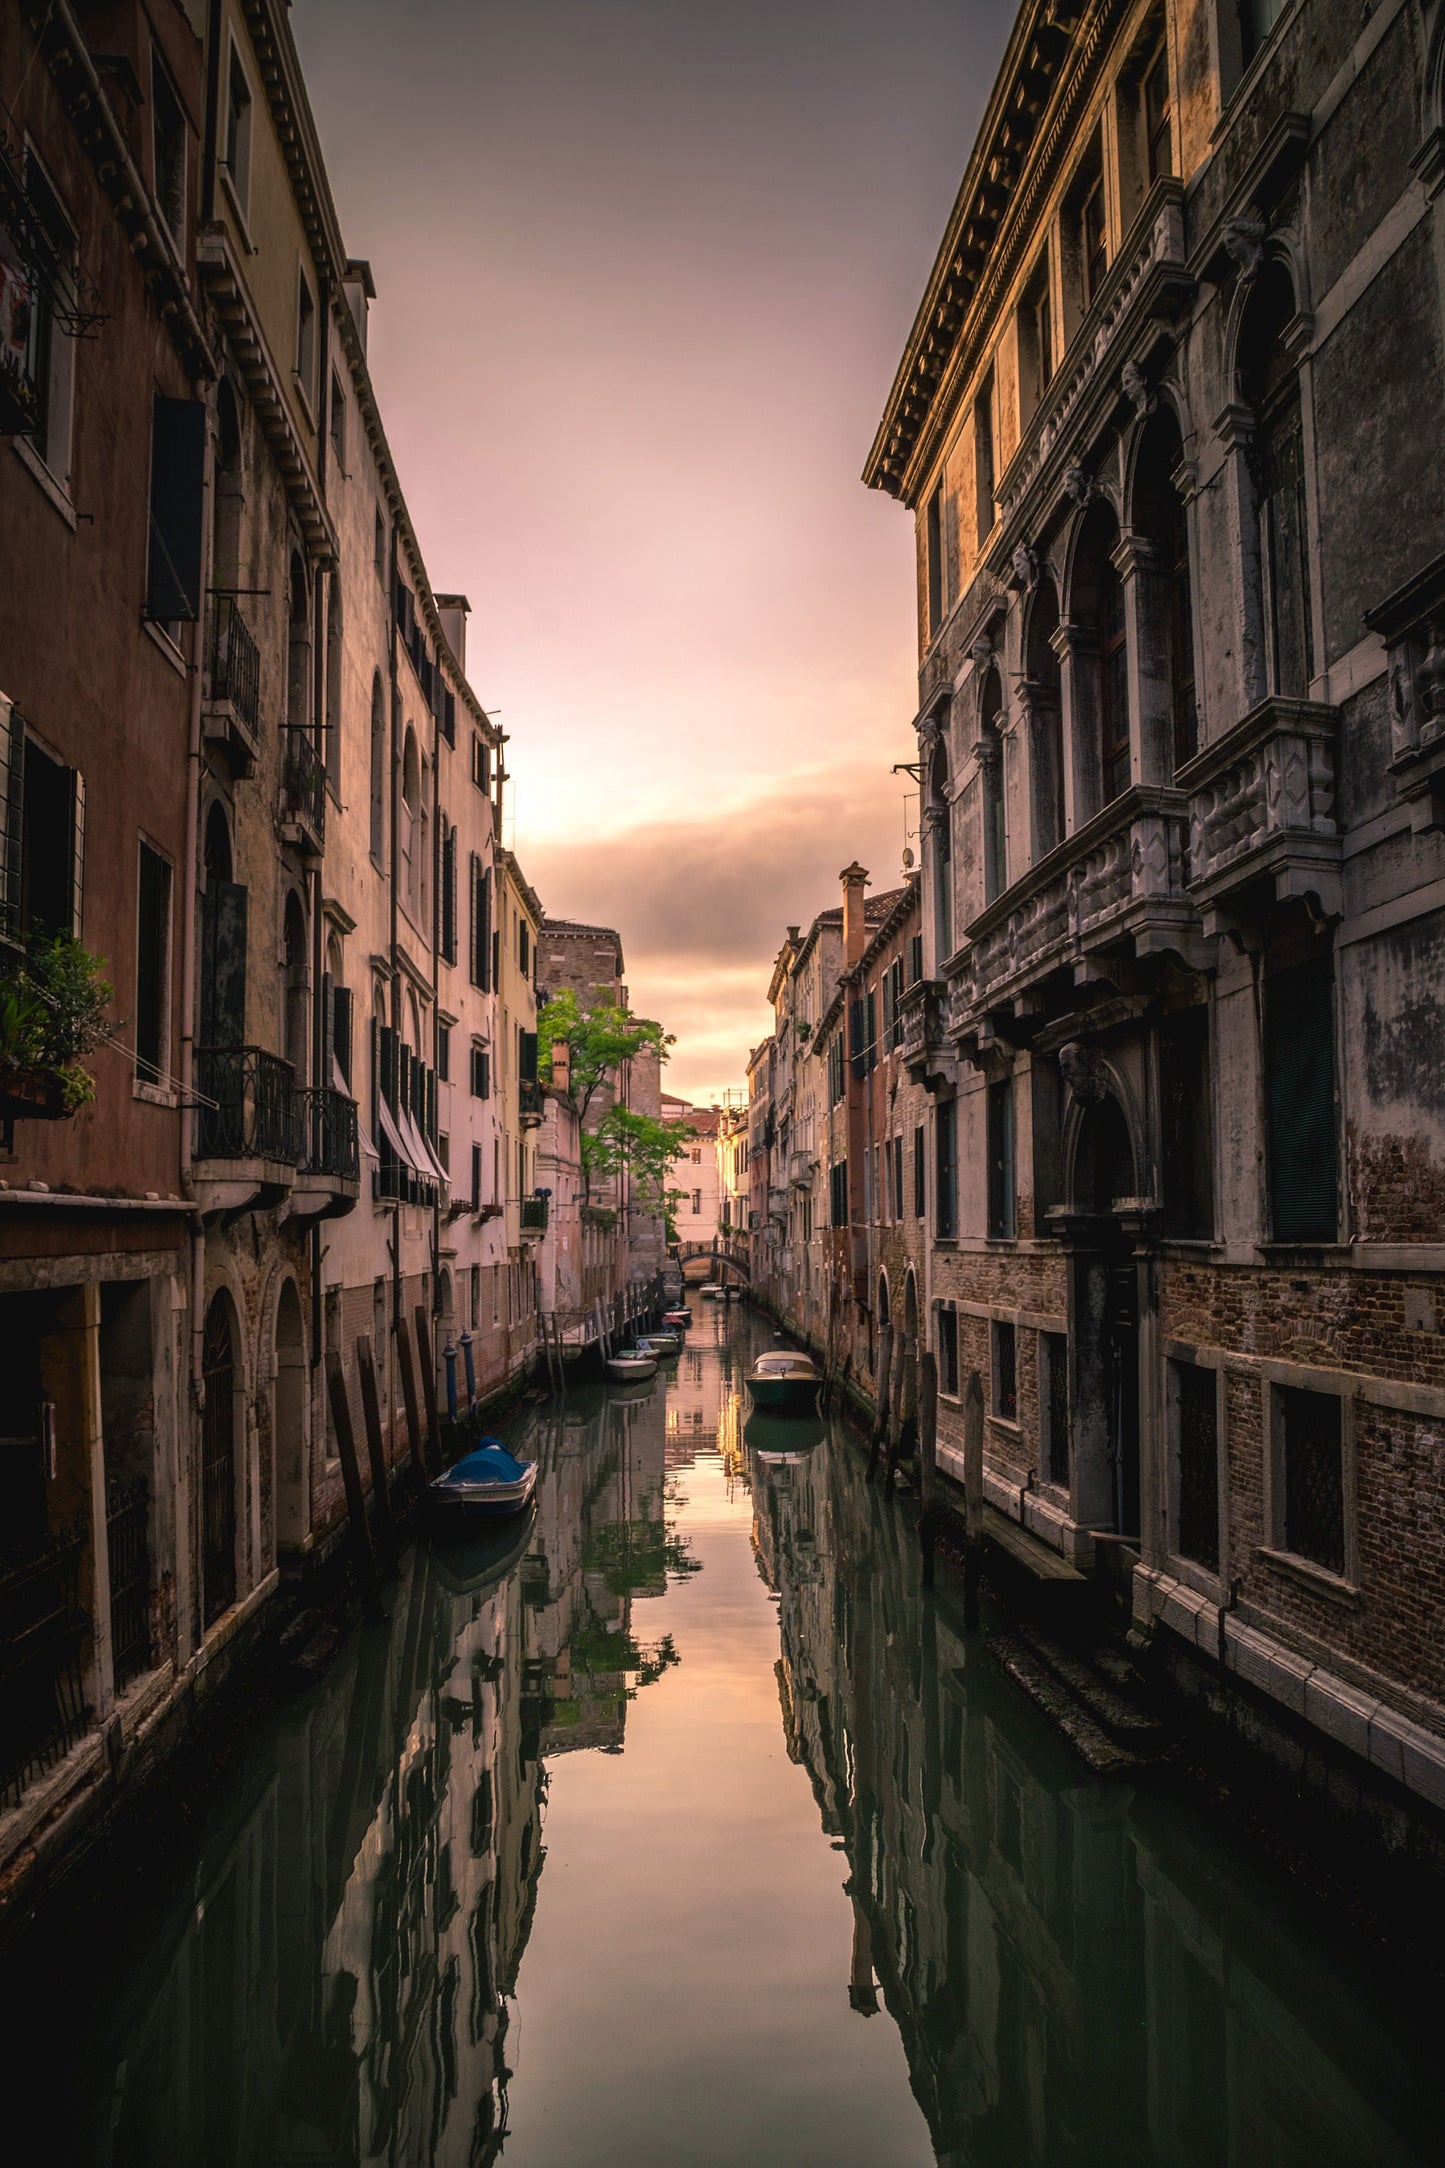 Fotografie-Print - Kanäle von Venedig bei Sonnenaufgang, Italien